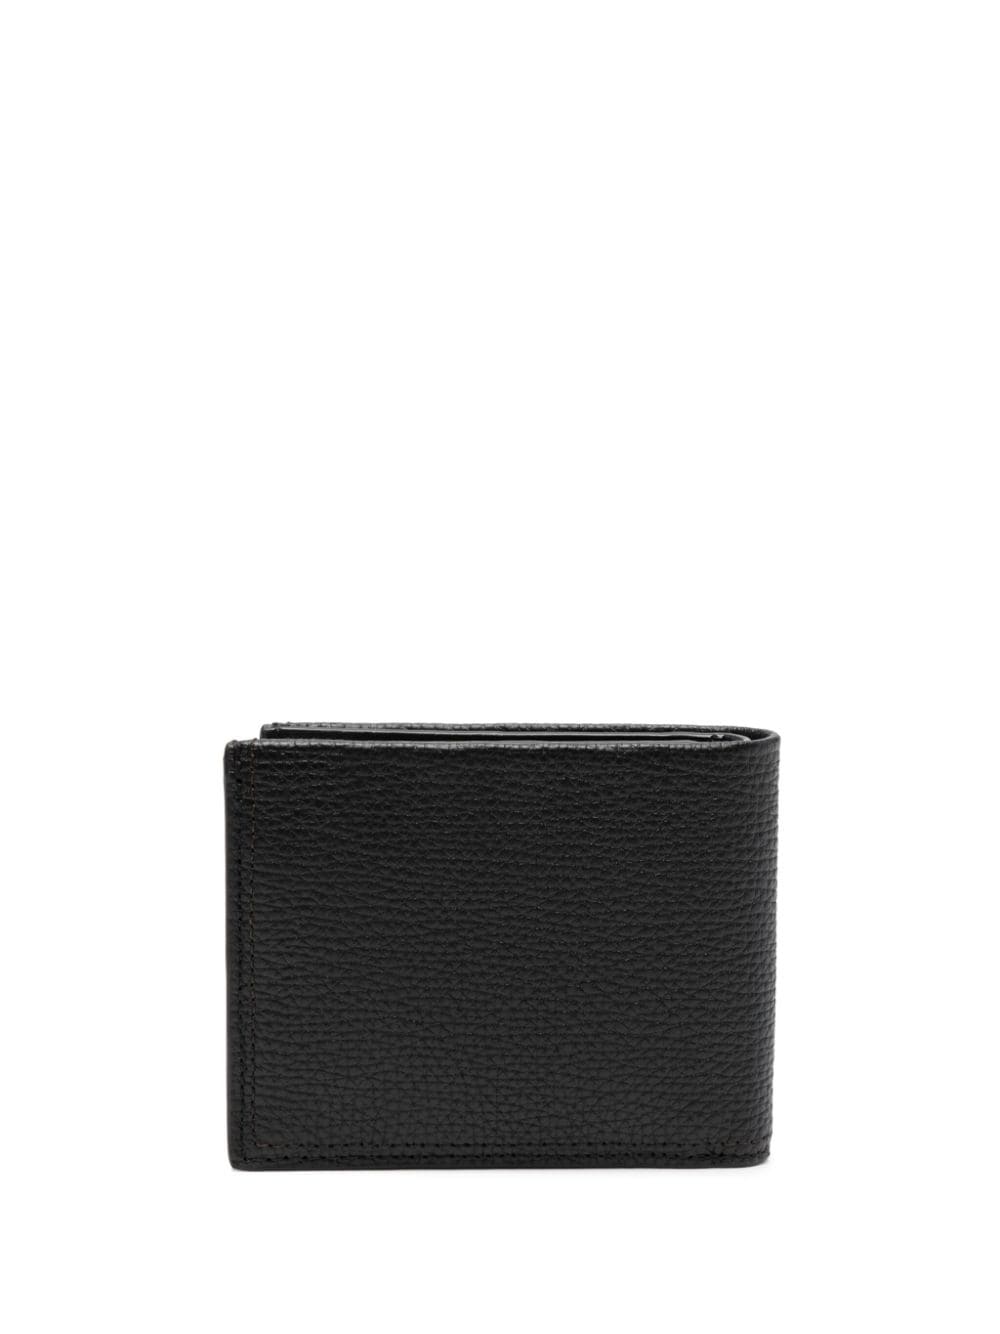 Image 2 of Calvin Klein Minimalist 5cc leather wallet